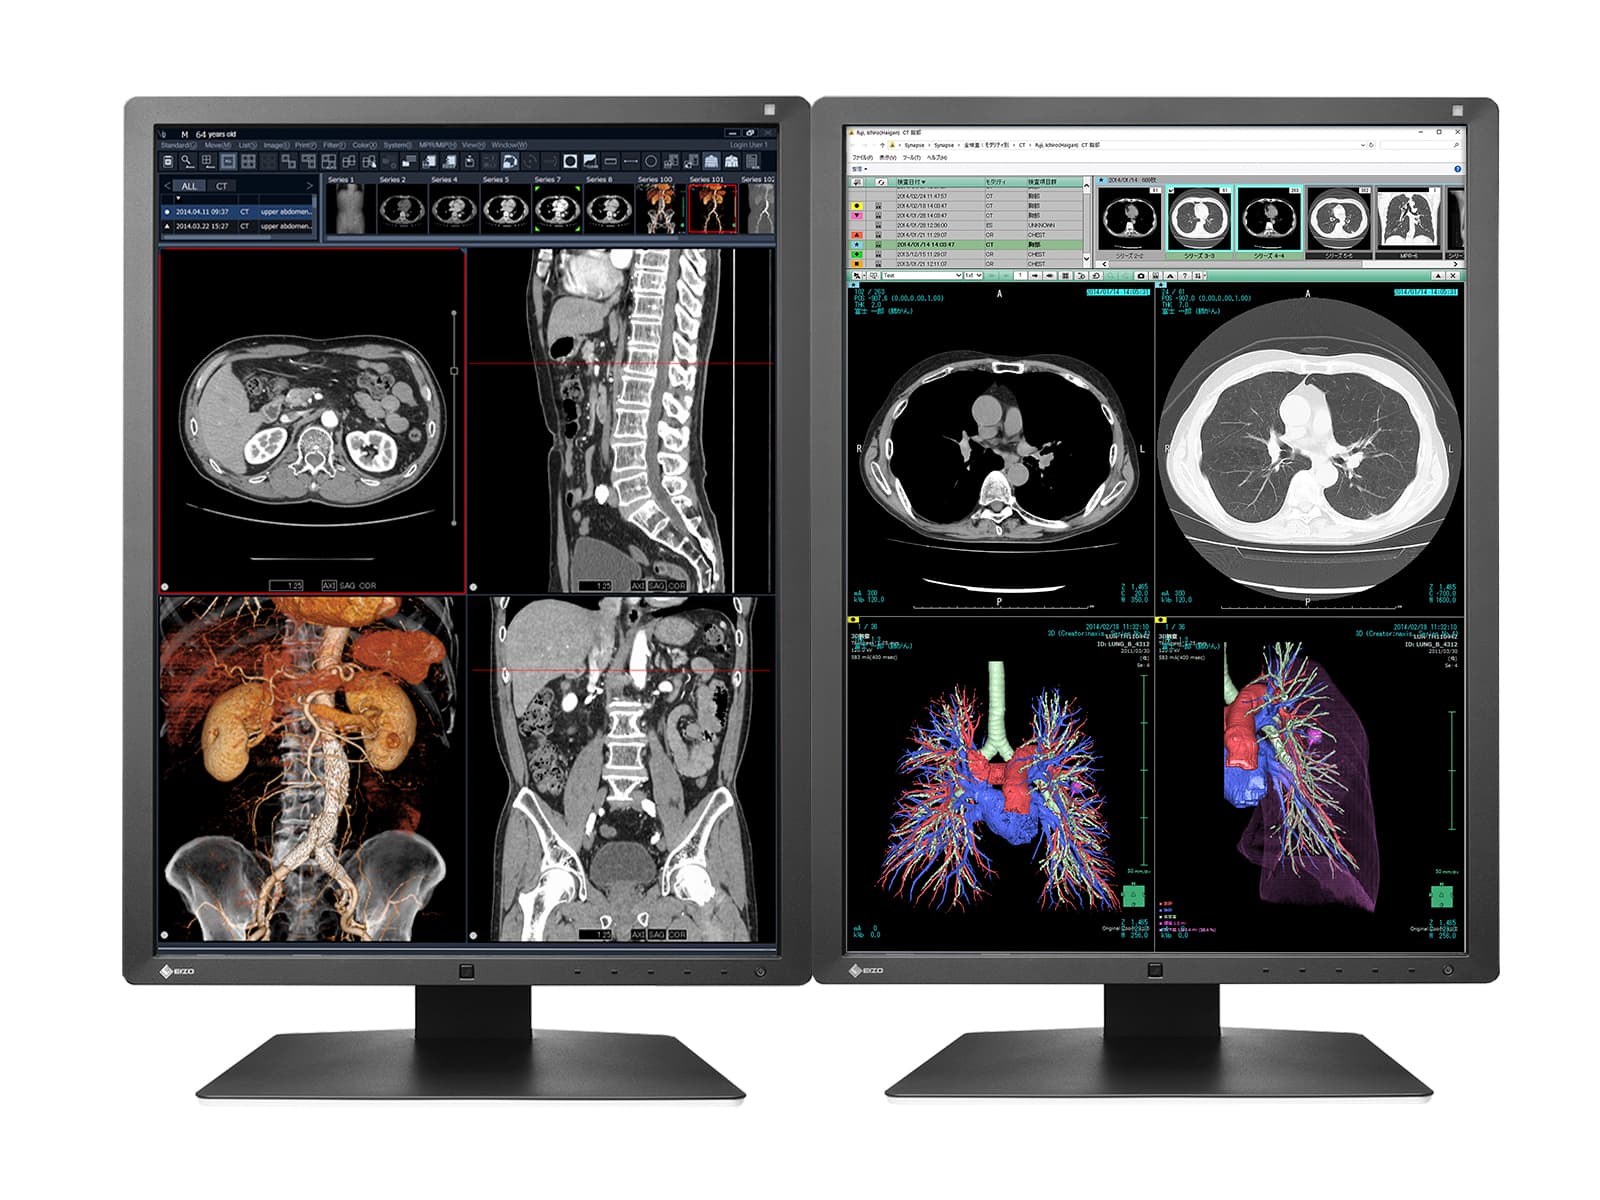 Eizo RadiForce RX250 2MP 21" Color LED Medical Diagnostic Radiology Display Monitor (RX250-BK)  